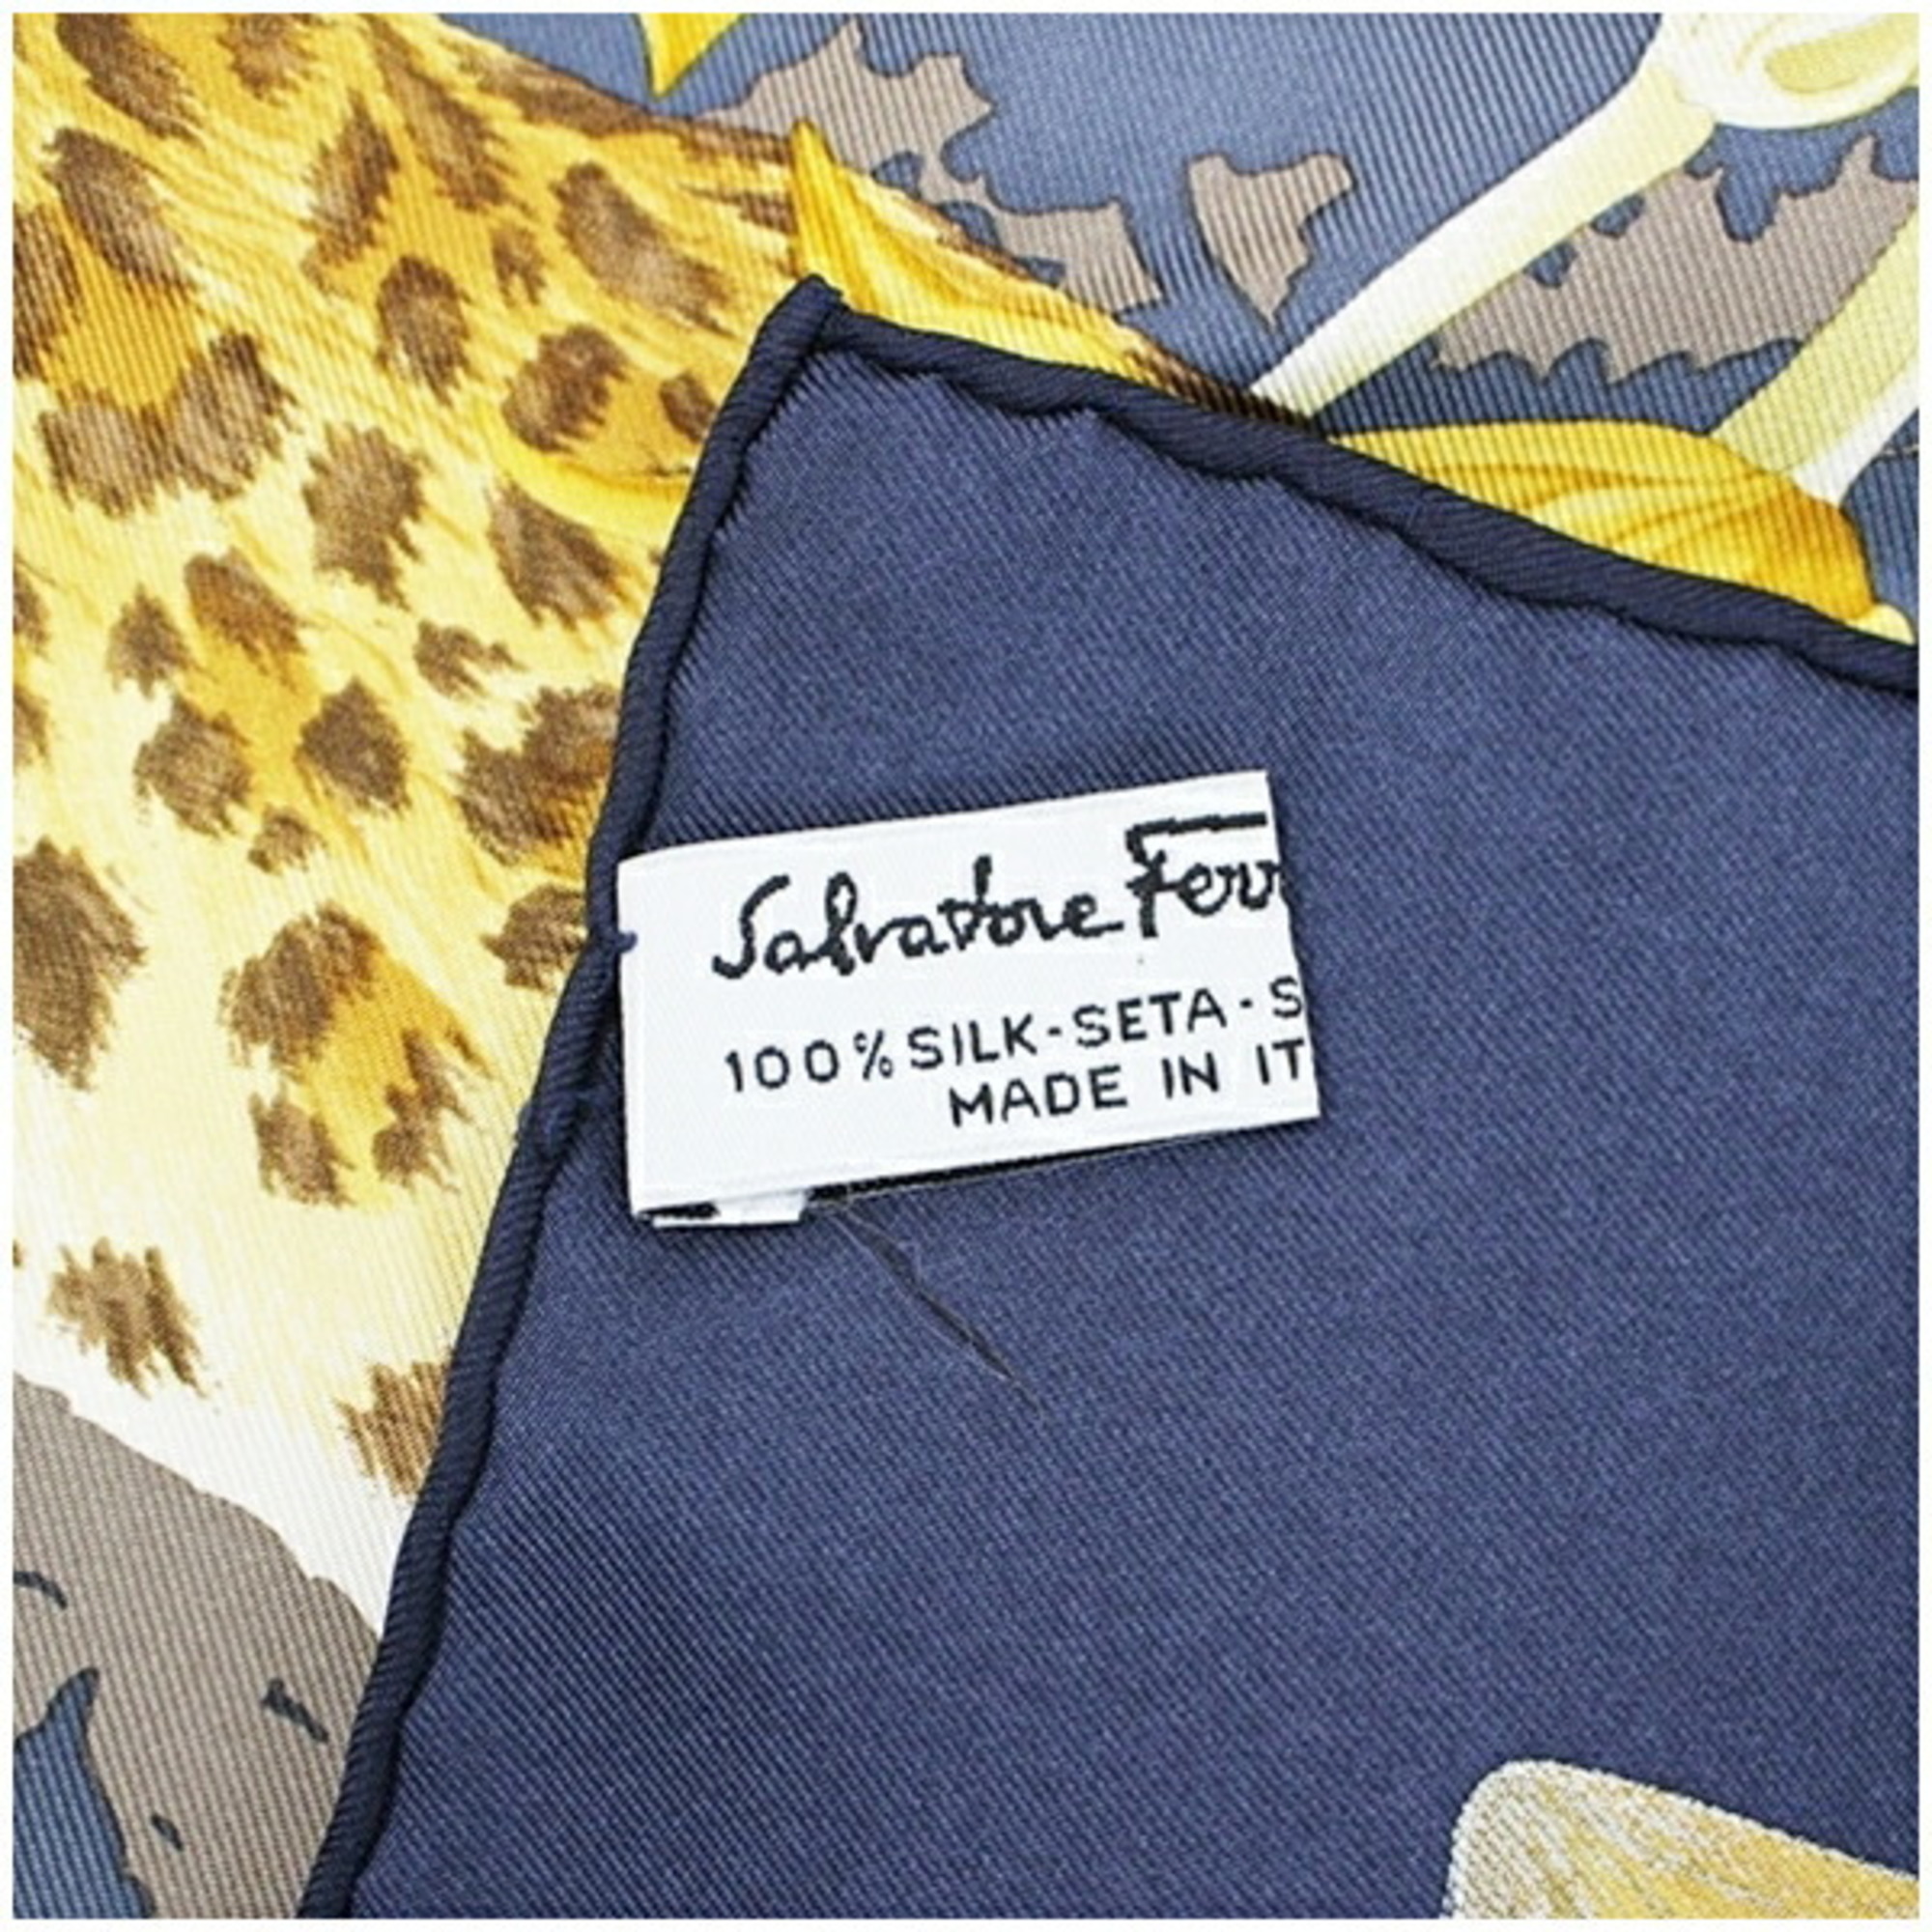 Salvatore Ferragamo Silk Scarf Muffler Leopard Print Navy x Multicolor Women's